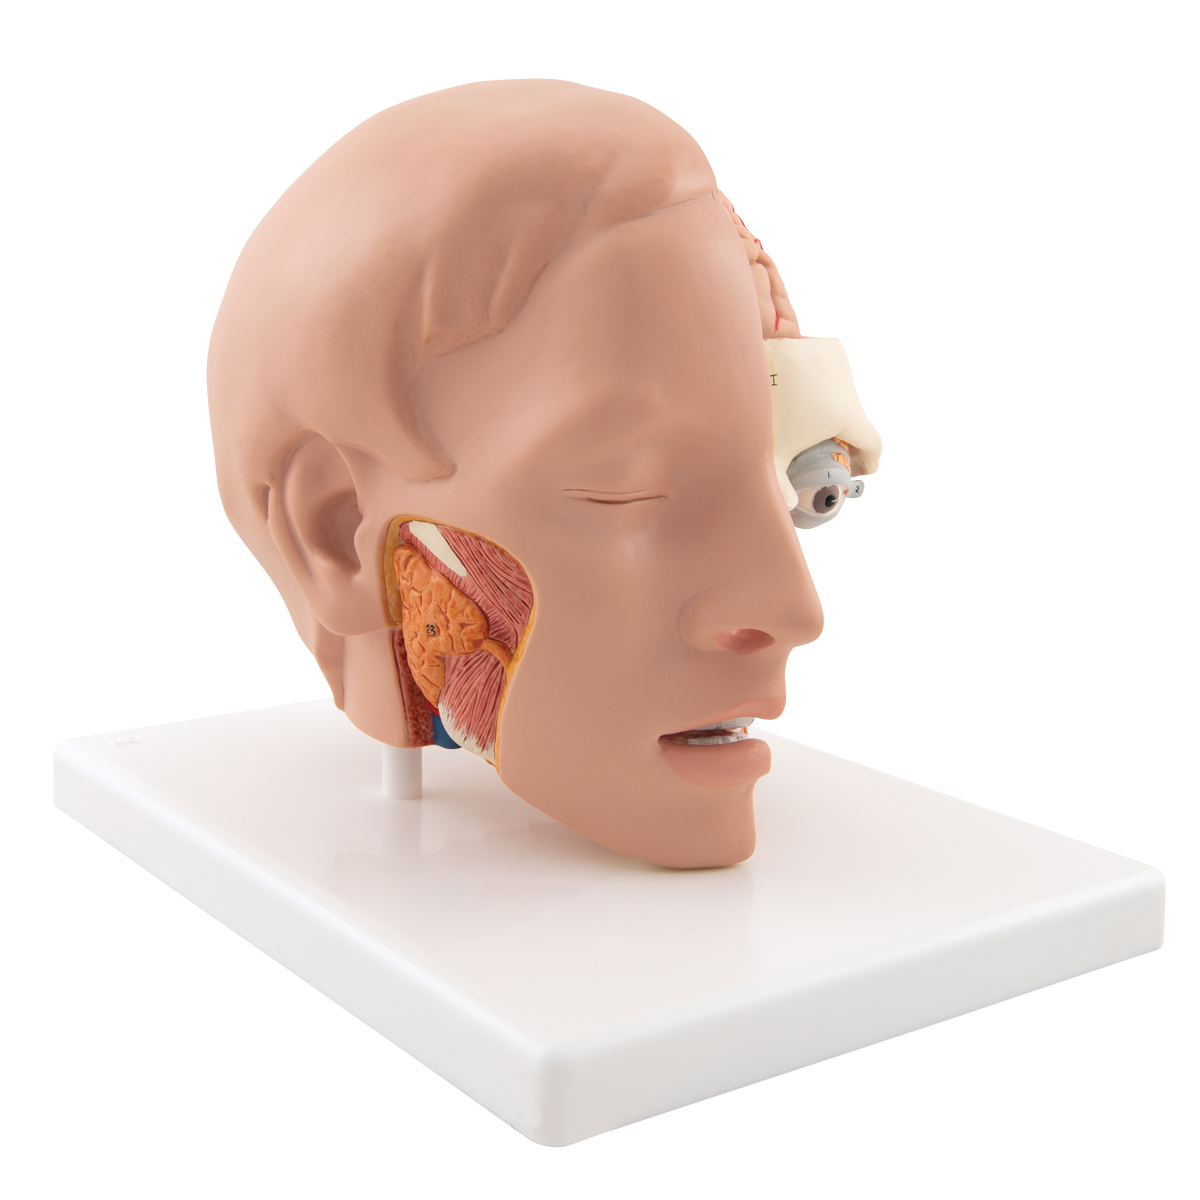 Anatomical Teaching Models - Plastic Anatomy Models - Head Model with 4